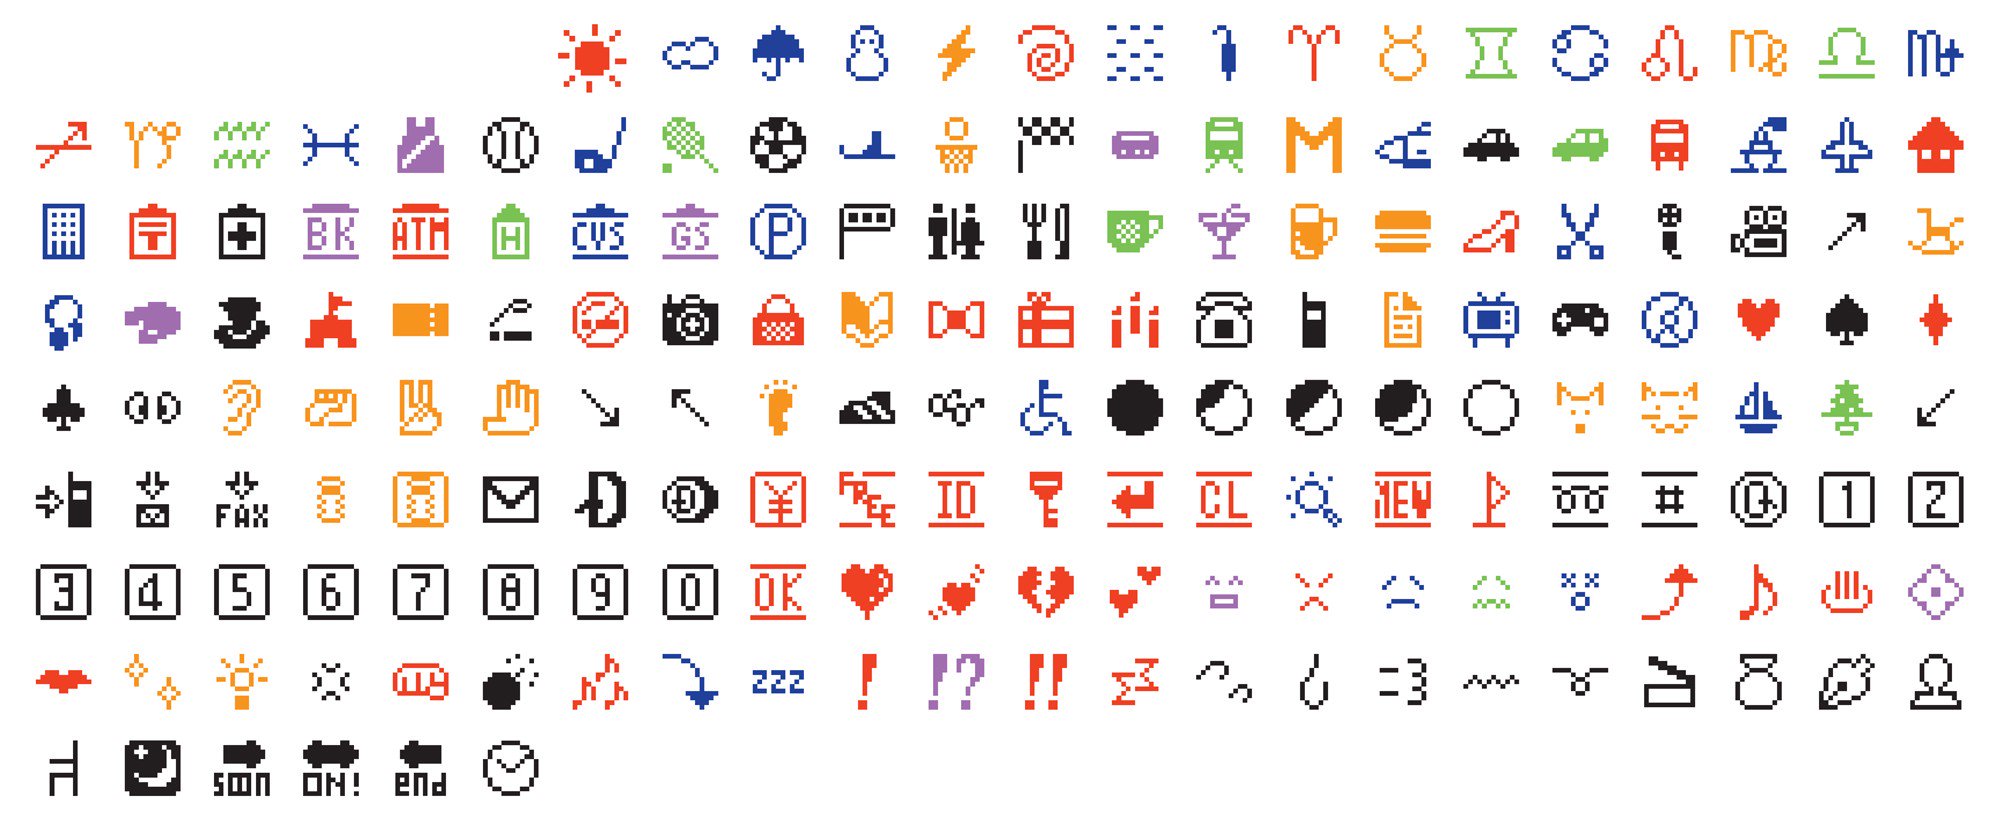 RT @presentcorrect: The first emoji…